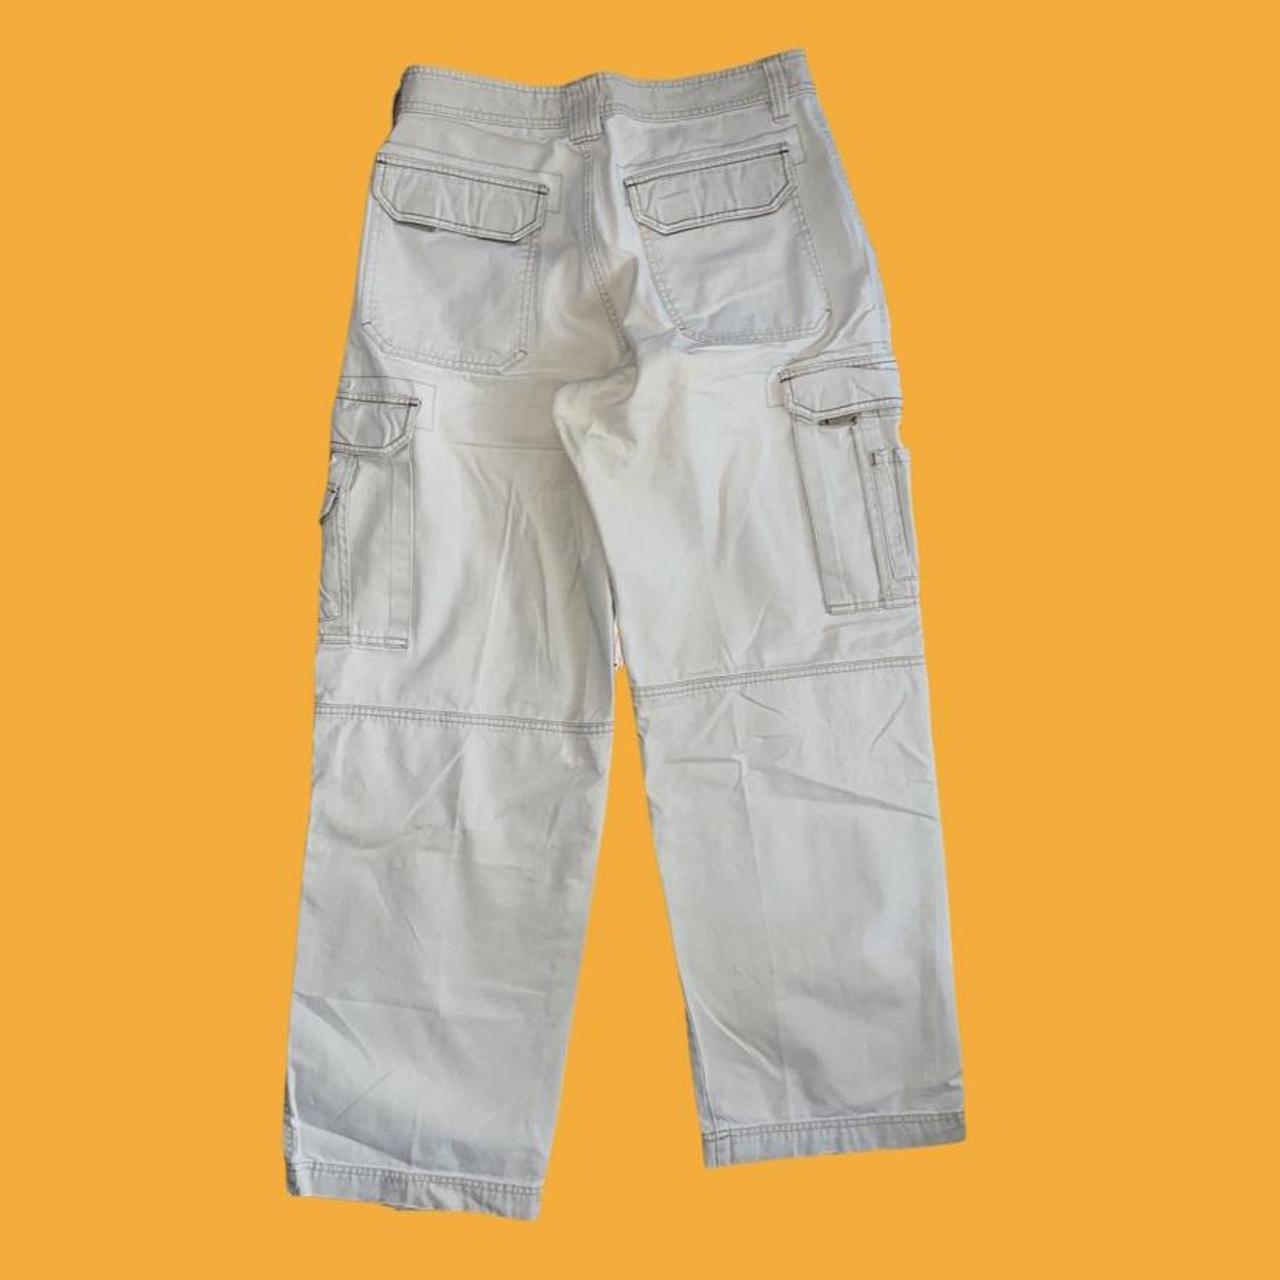 Union Bay Men's White and Cream Trousers (2)